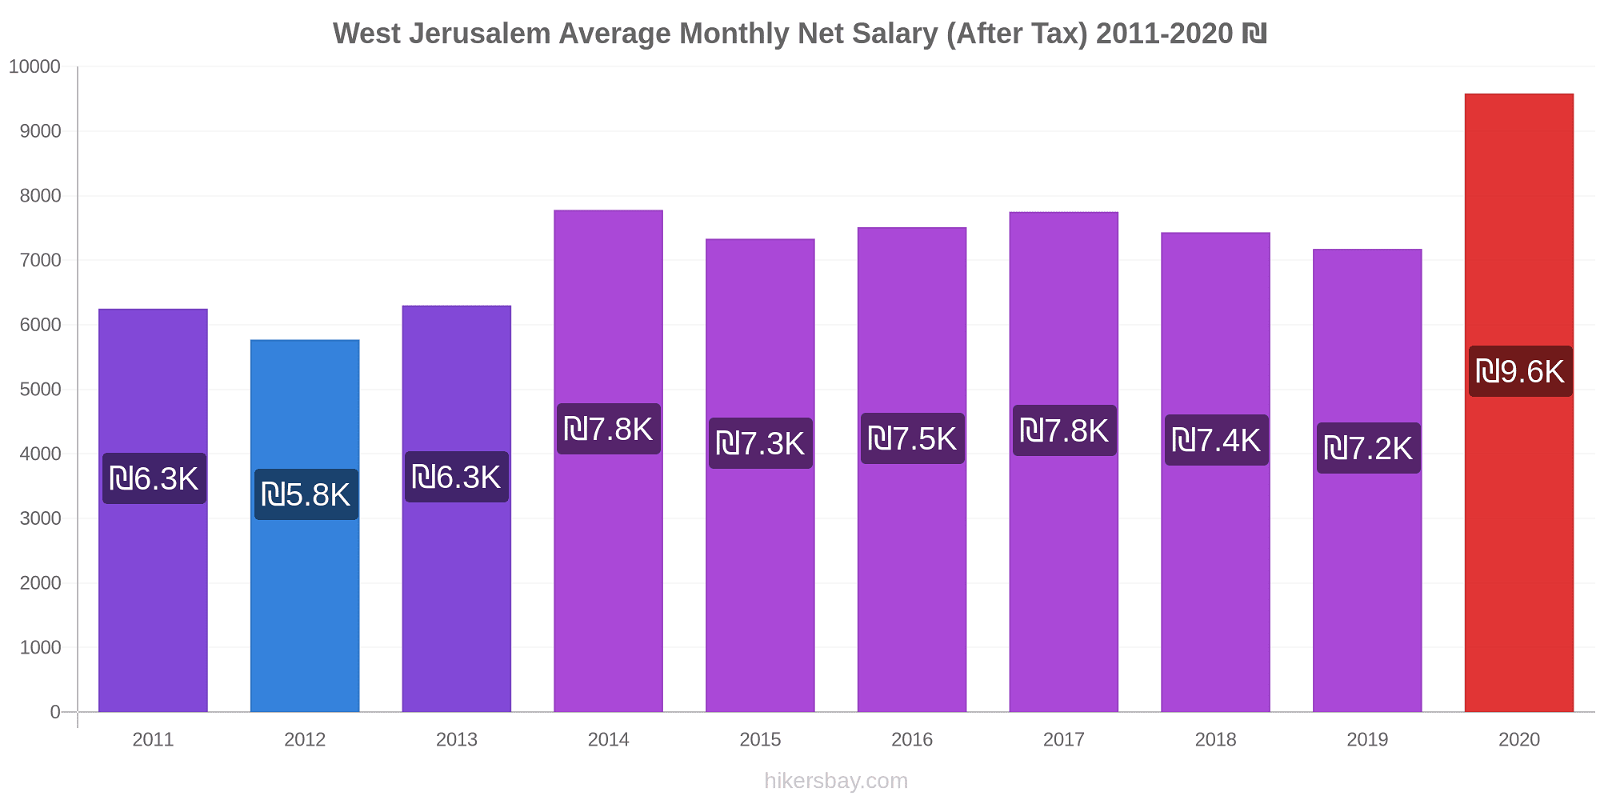 West Jerusalem price changes Average Monthly Net Salary (After Tax) hikersbay.com